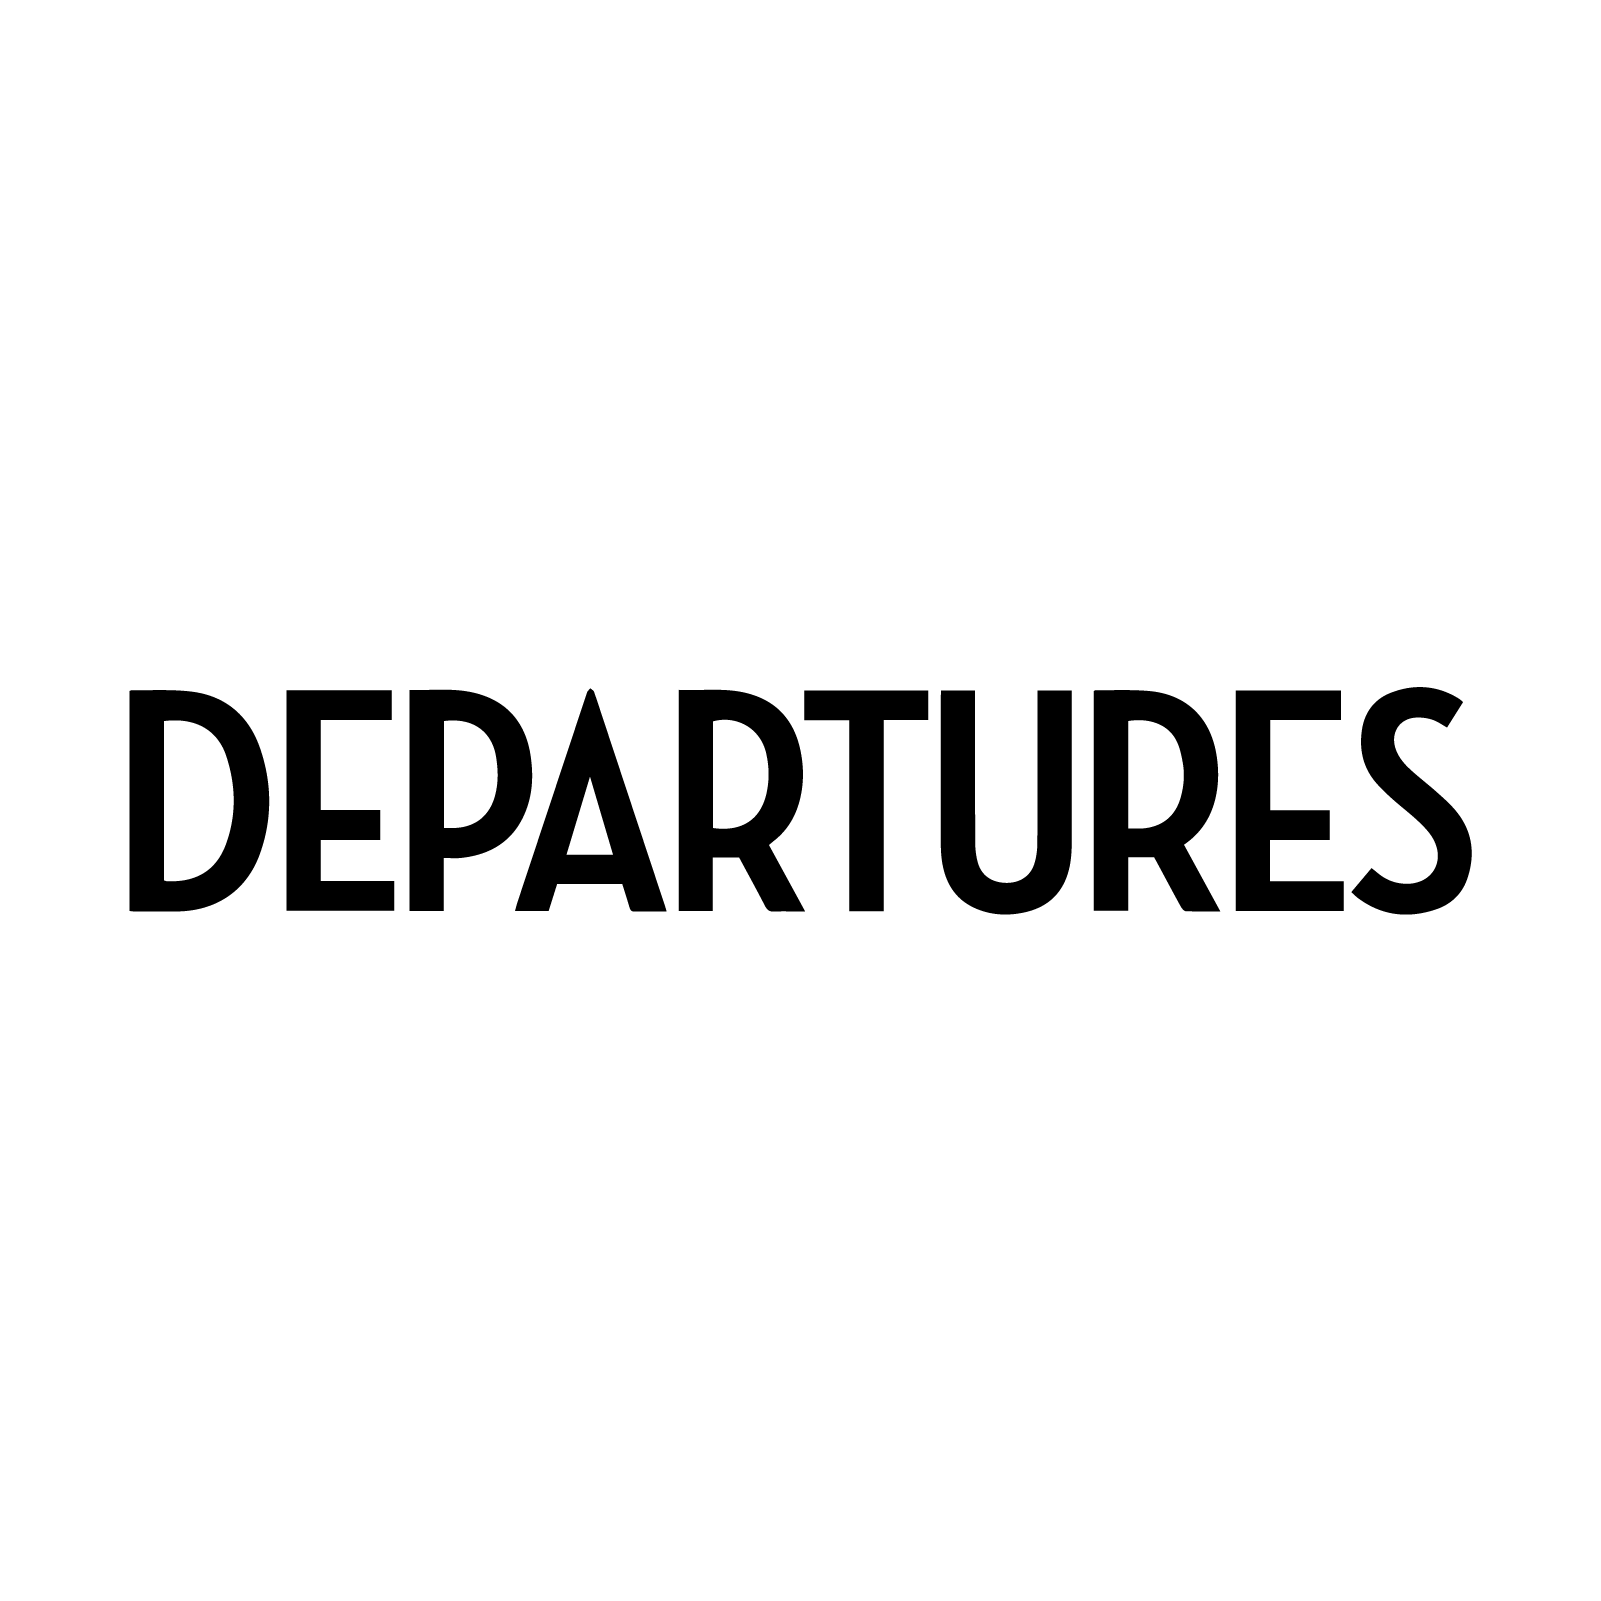 Press Logos_Departures.png